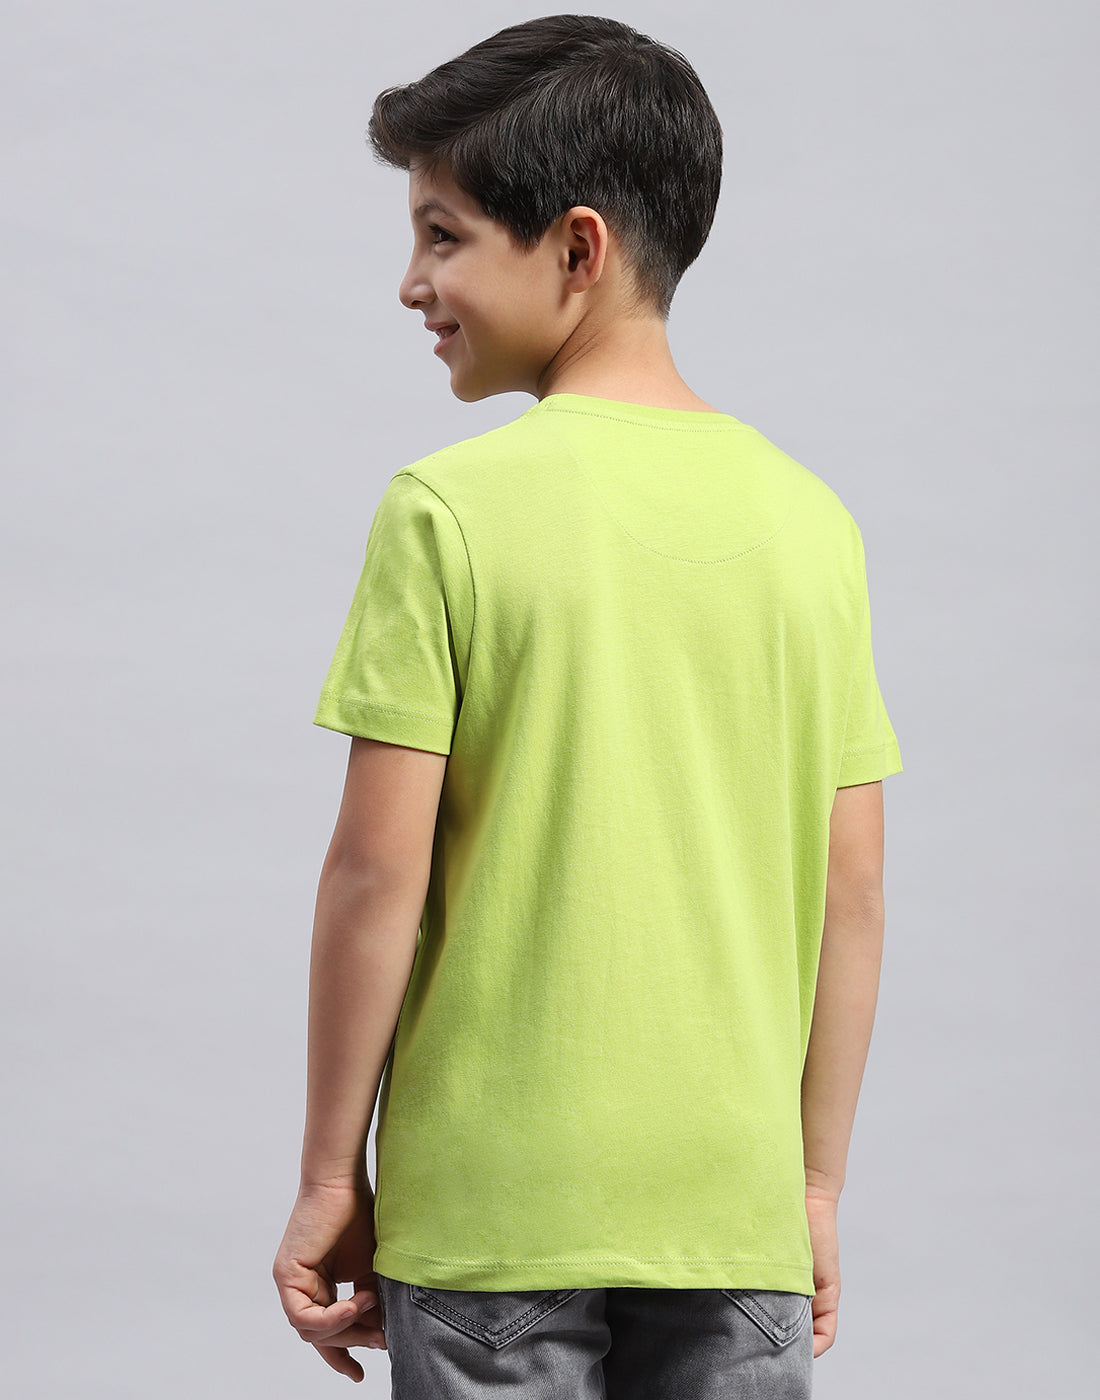 Boys Navy Blue & Green Printed Round Neck Half Sleeve T-Shirt